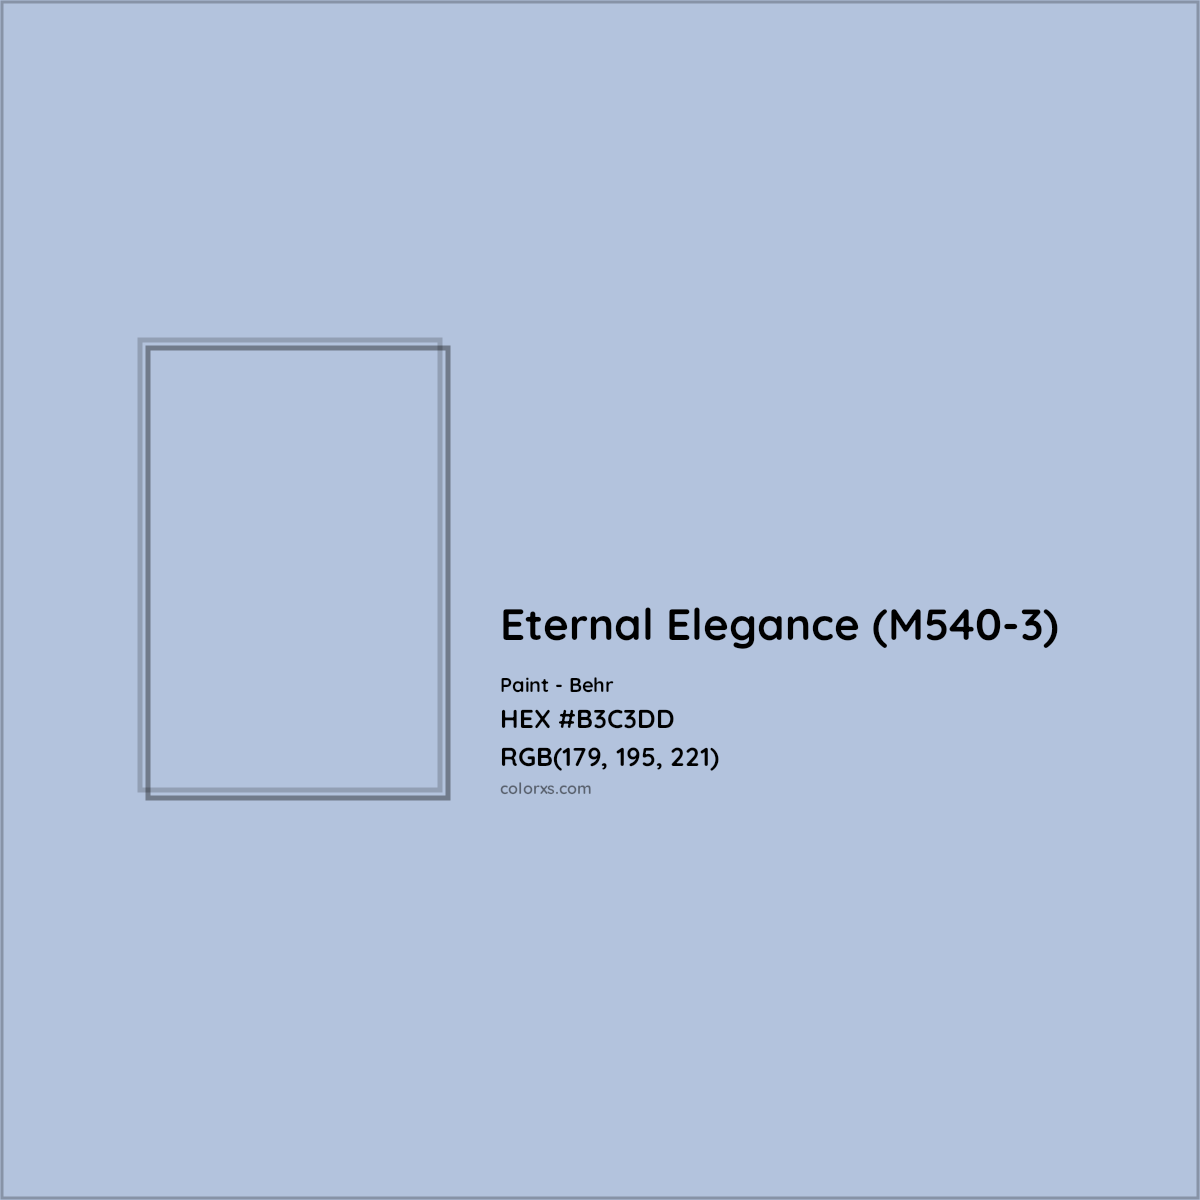 HEX #B3C3DD Eternal Elegance (M540-3) Paint Behr - Color Code